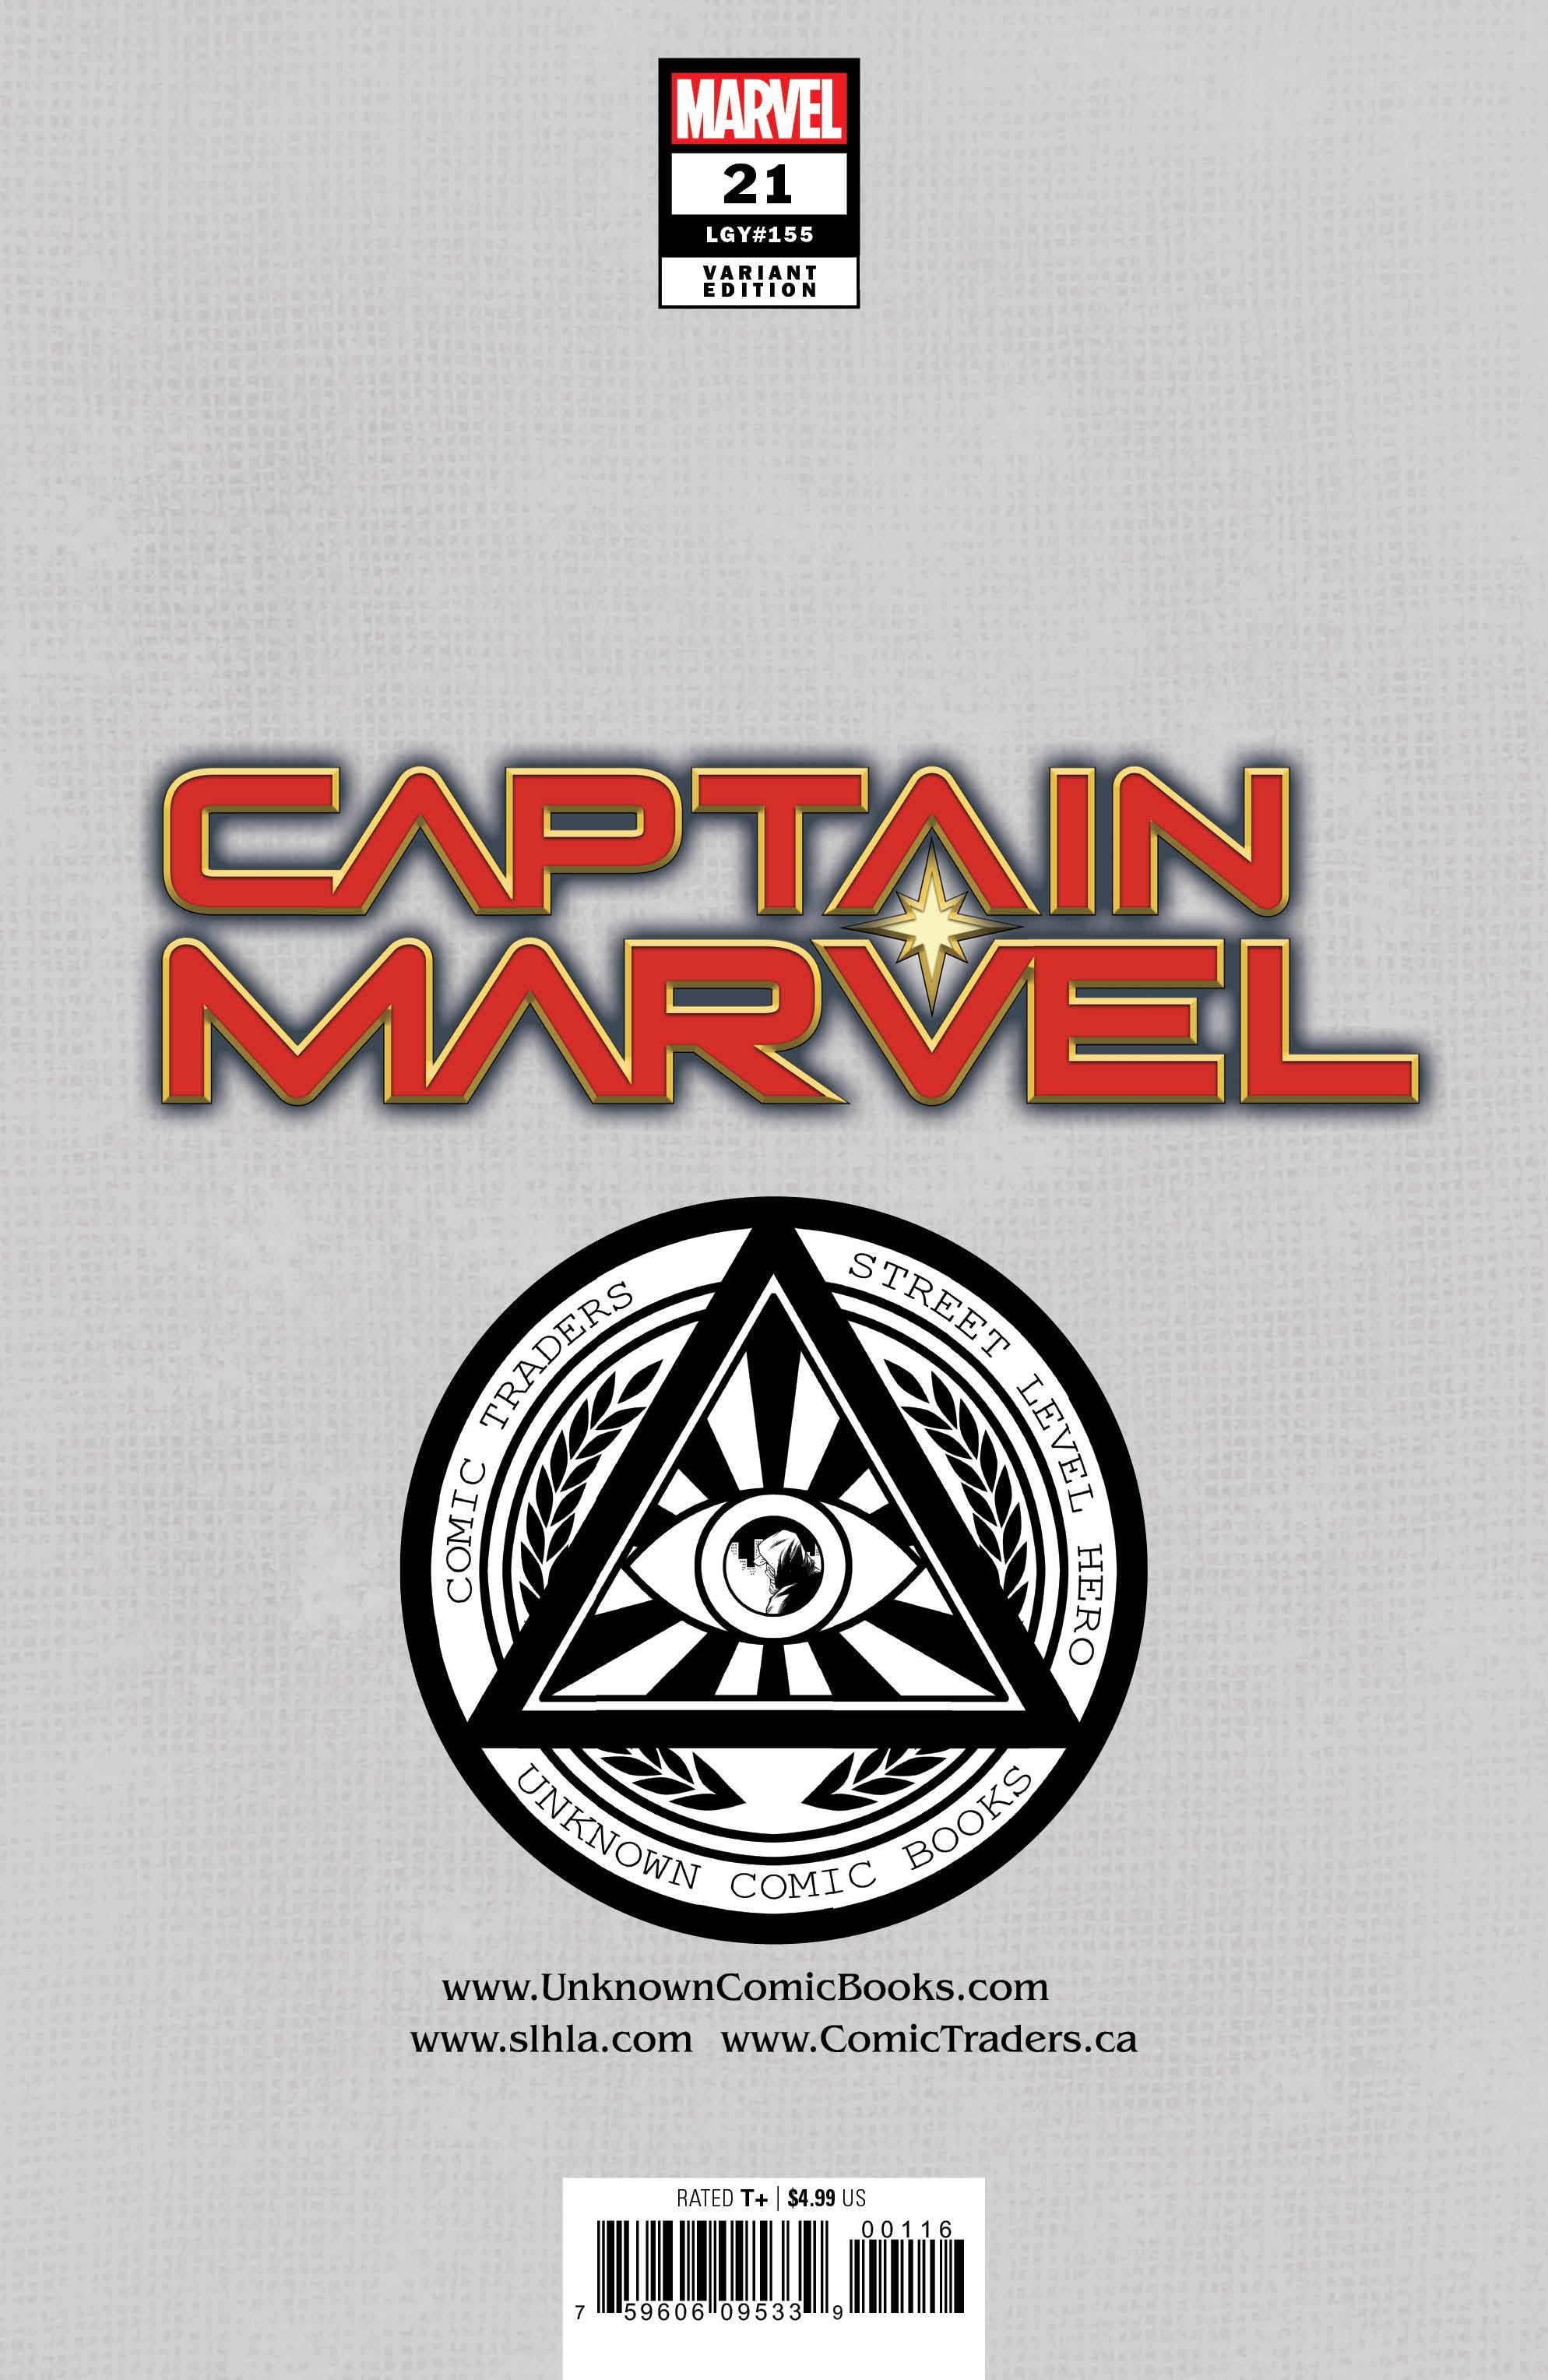 captain marvel: dark tempest #1 unknown comics leirix exclusive var  (7/05/2023) (07/05/2023)